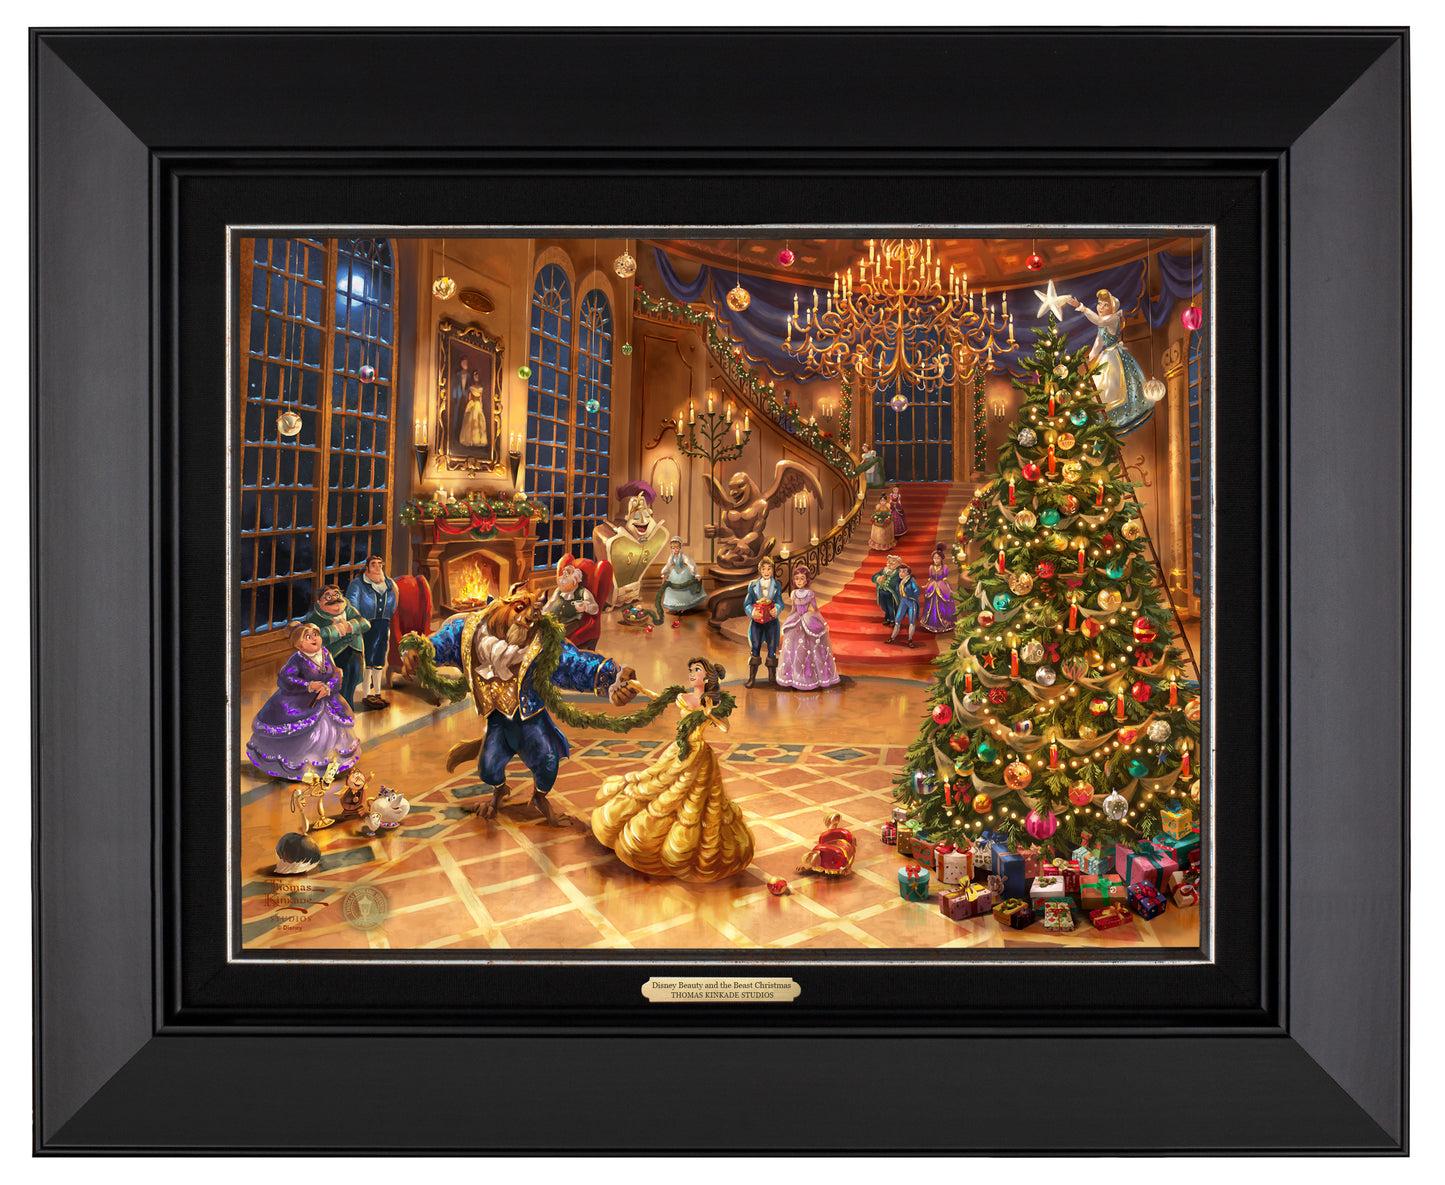 158460_CLF_Disney Beauty and the Beast Christmas Celebration_12x16_Framed_Classic_Black.jpg